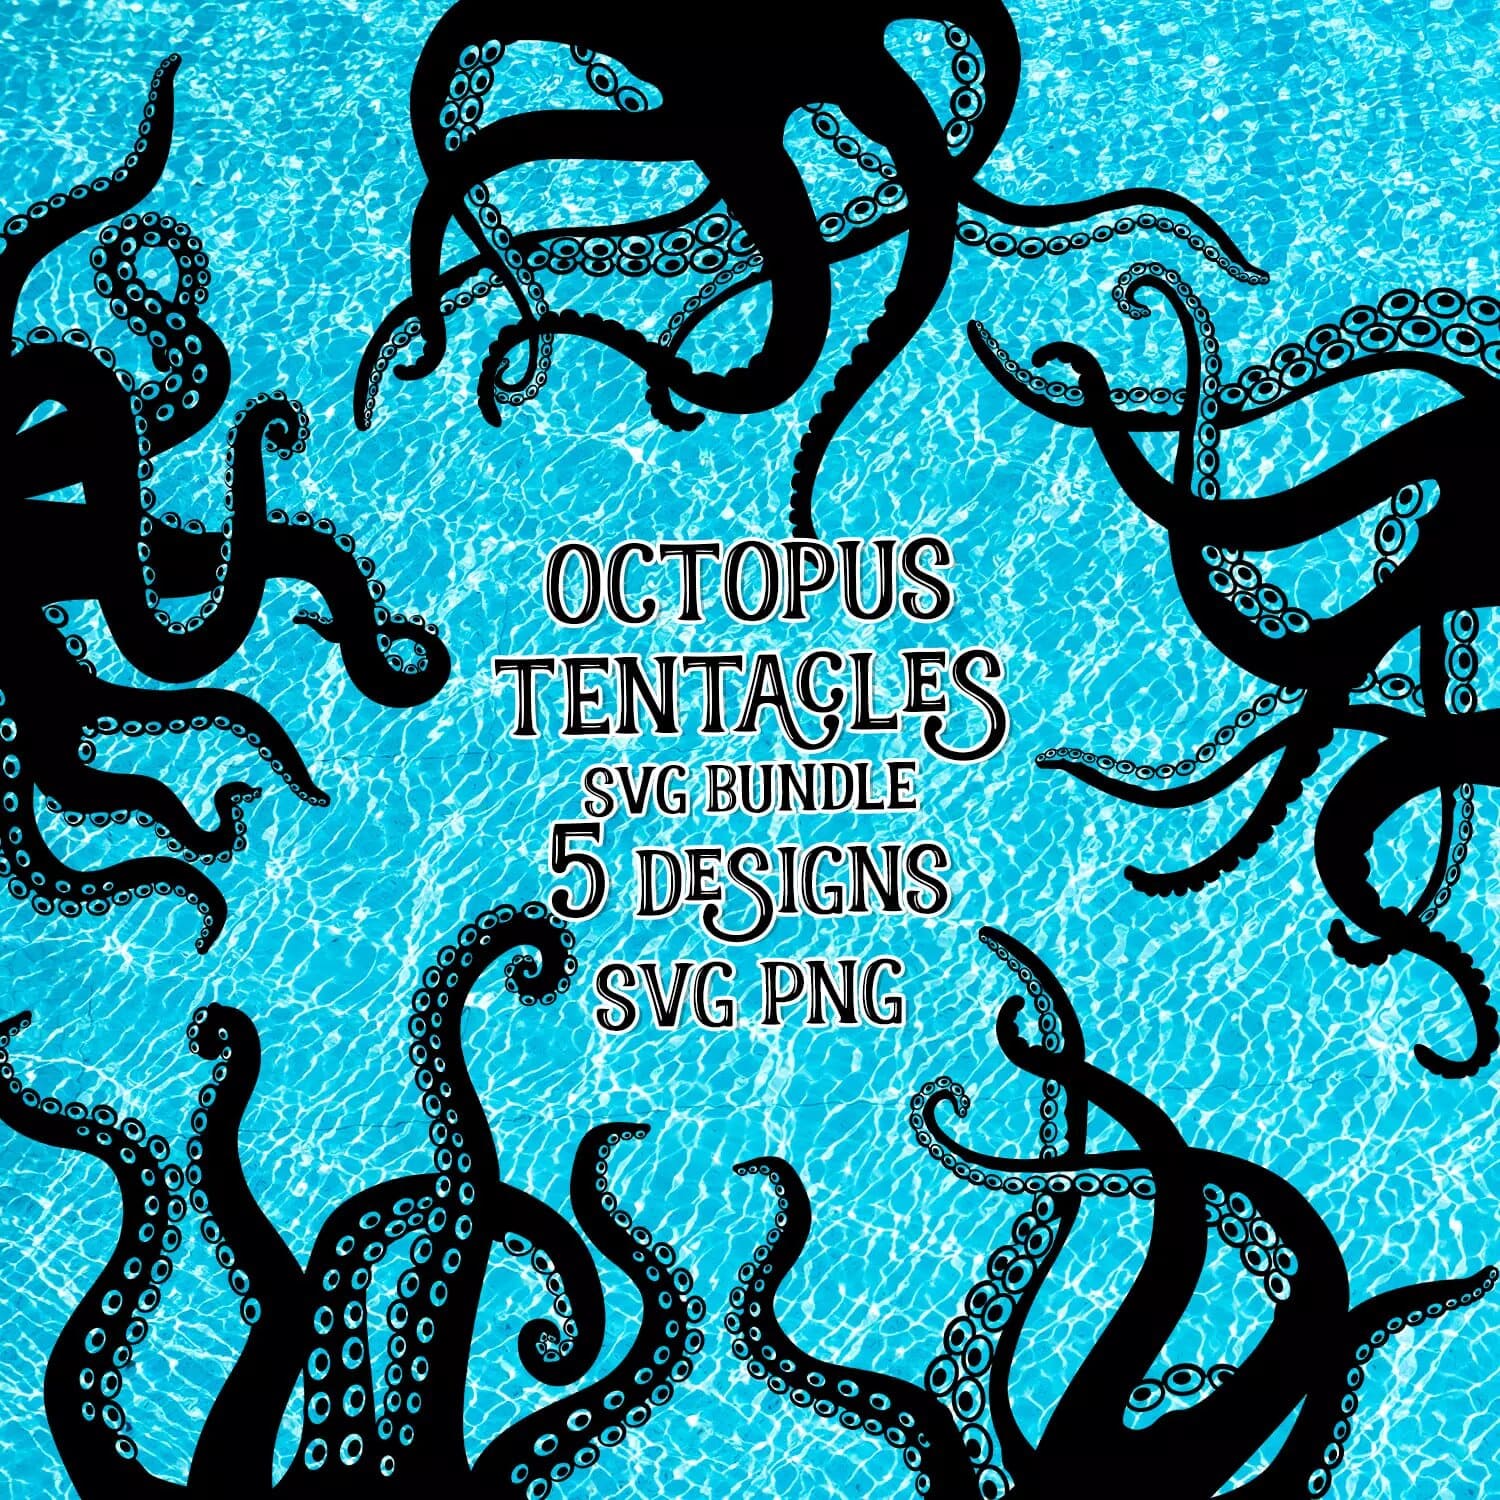 Octopus tentacles svg bundle 5 designs svg.